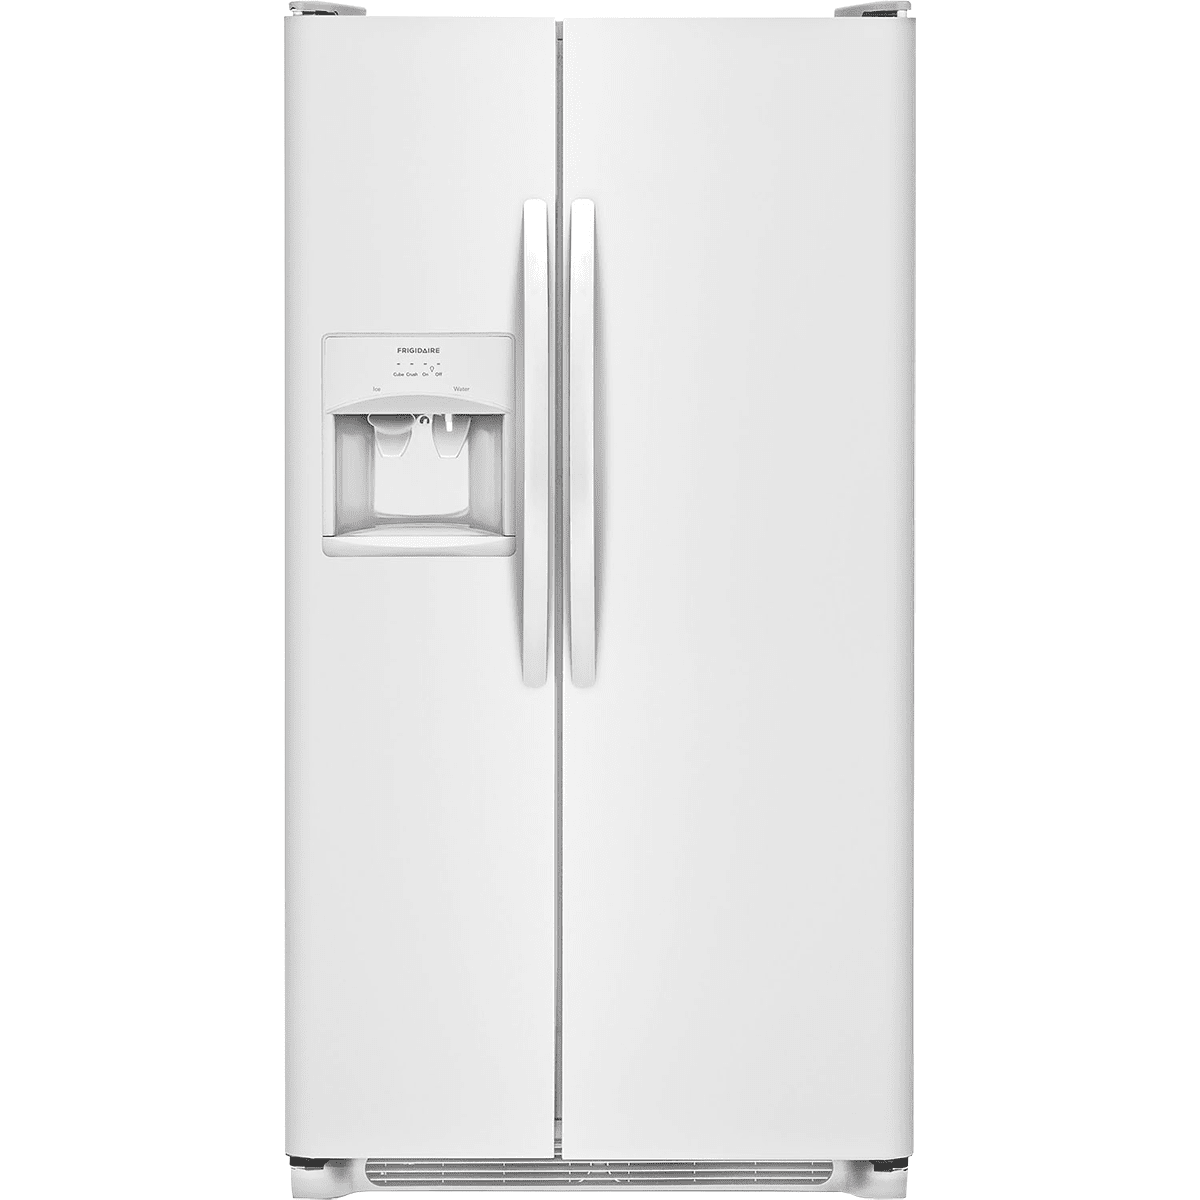 Frigidaire 25.6 Cu. Ft. Side-by-Side Refrigerator - Pearl